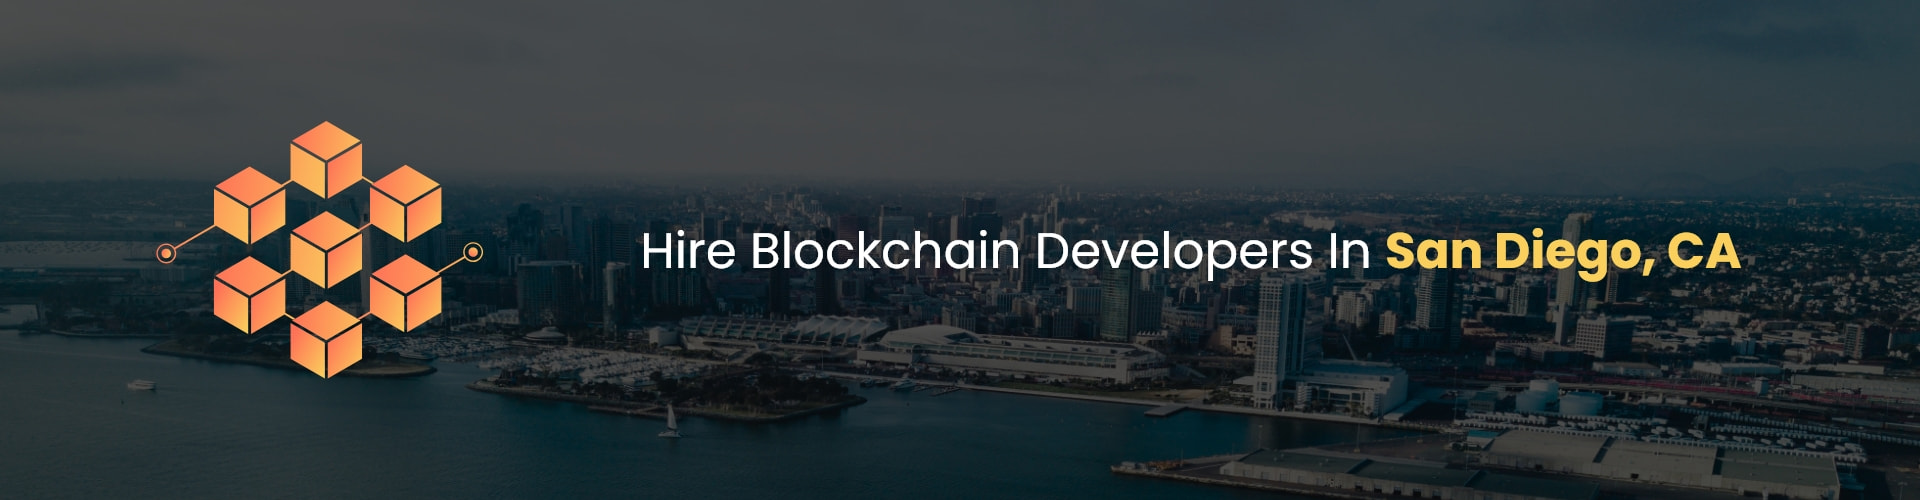 hire blockchain developers in san diego